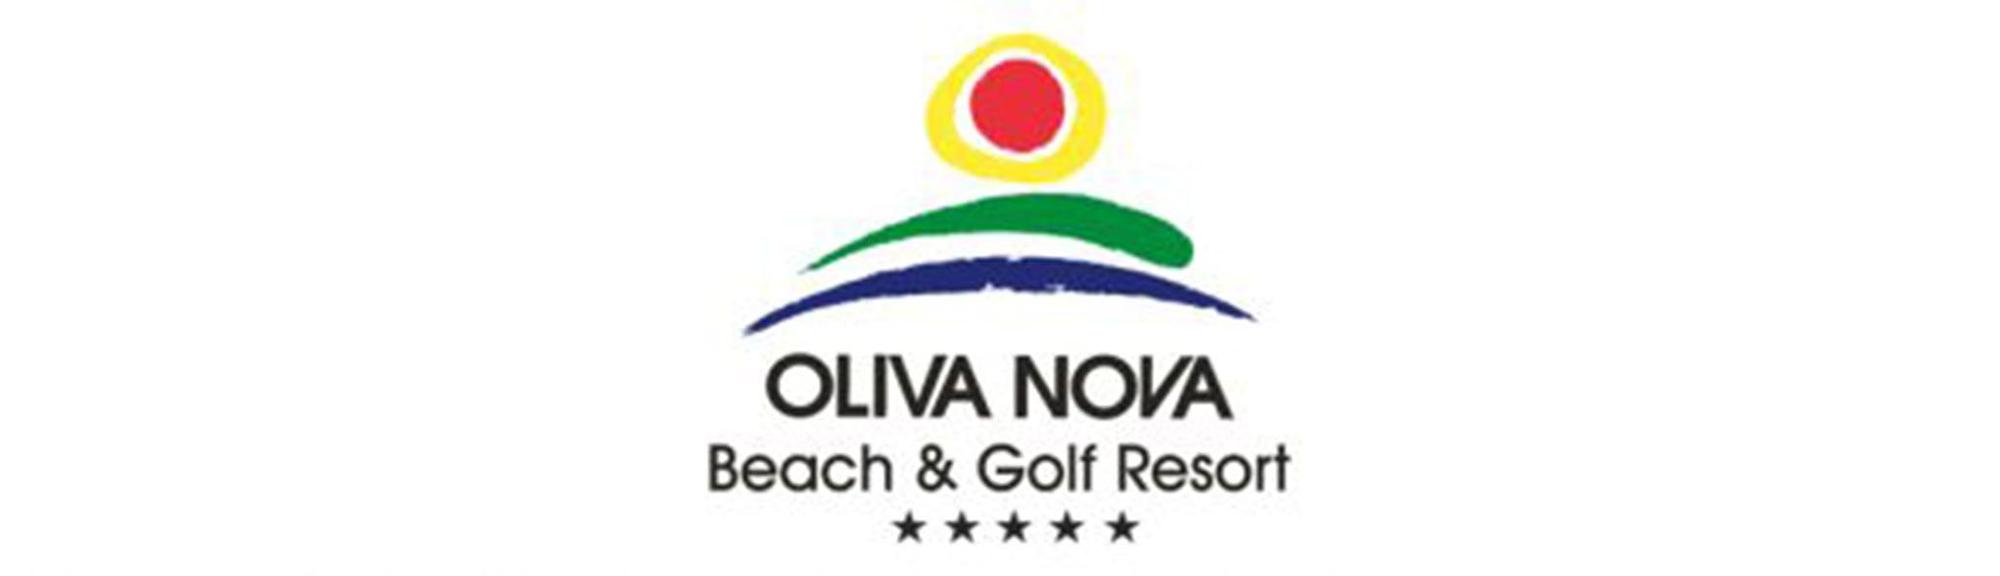 Oliva nova logo